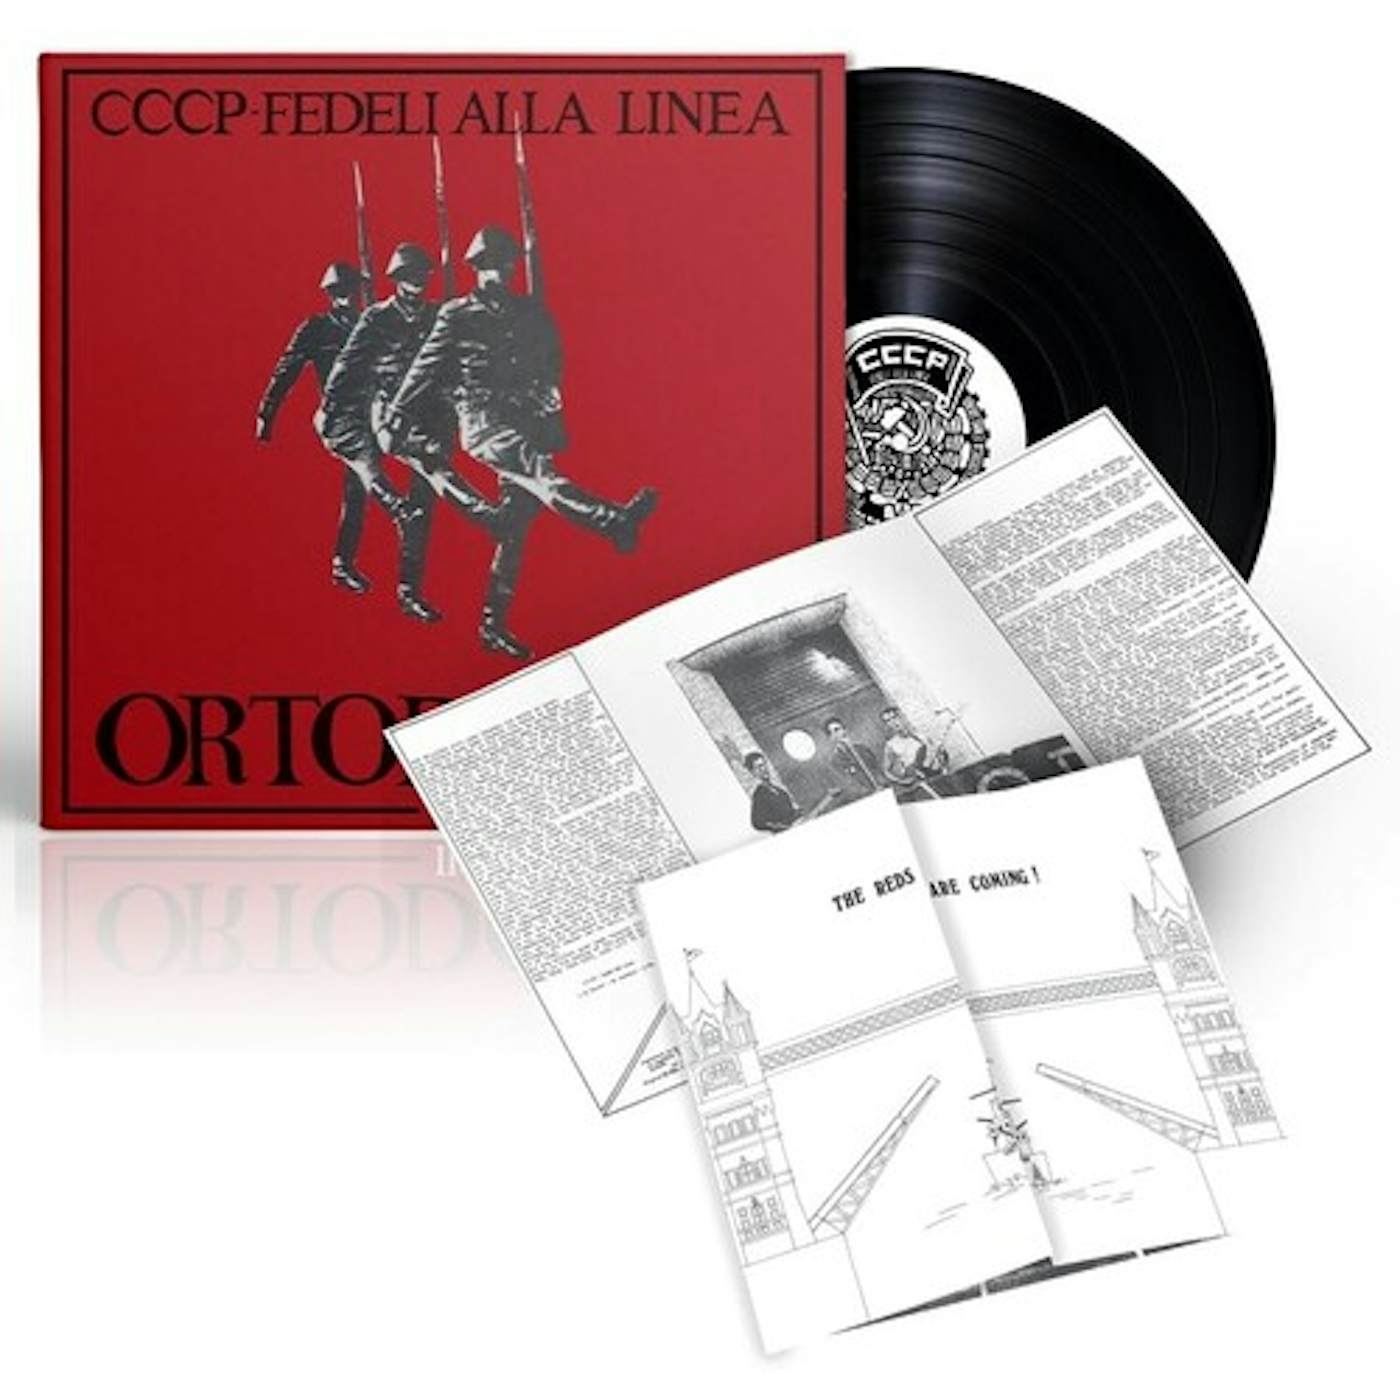  Epica Etica Etnica Pathos - Red Vinyl: CDs & Vinyl